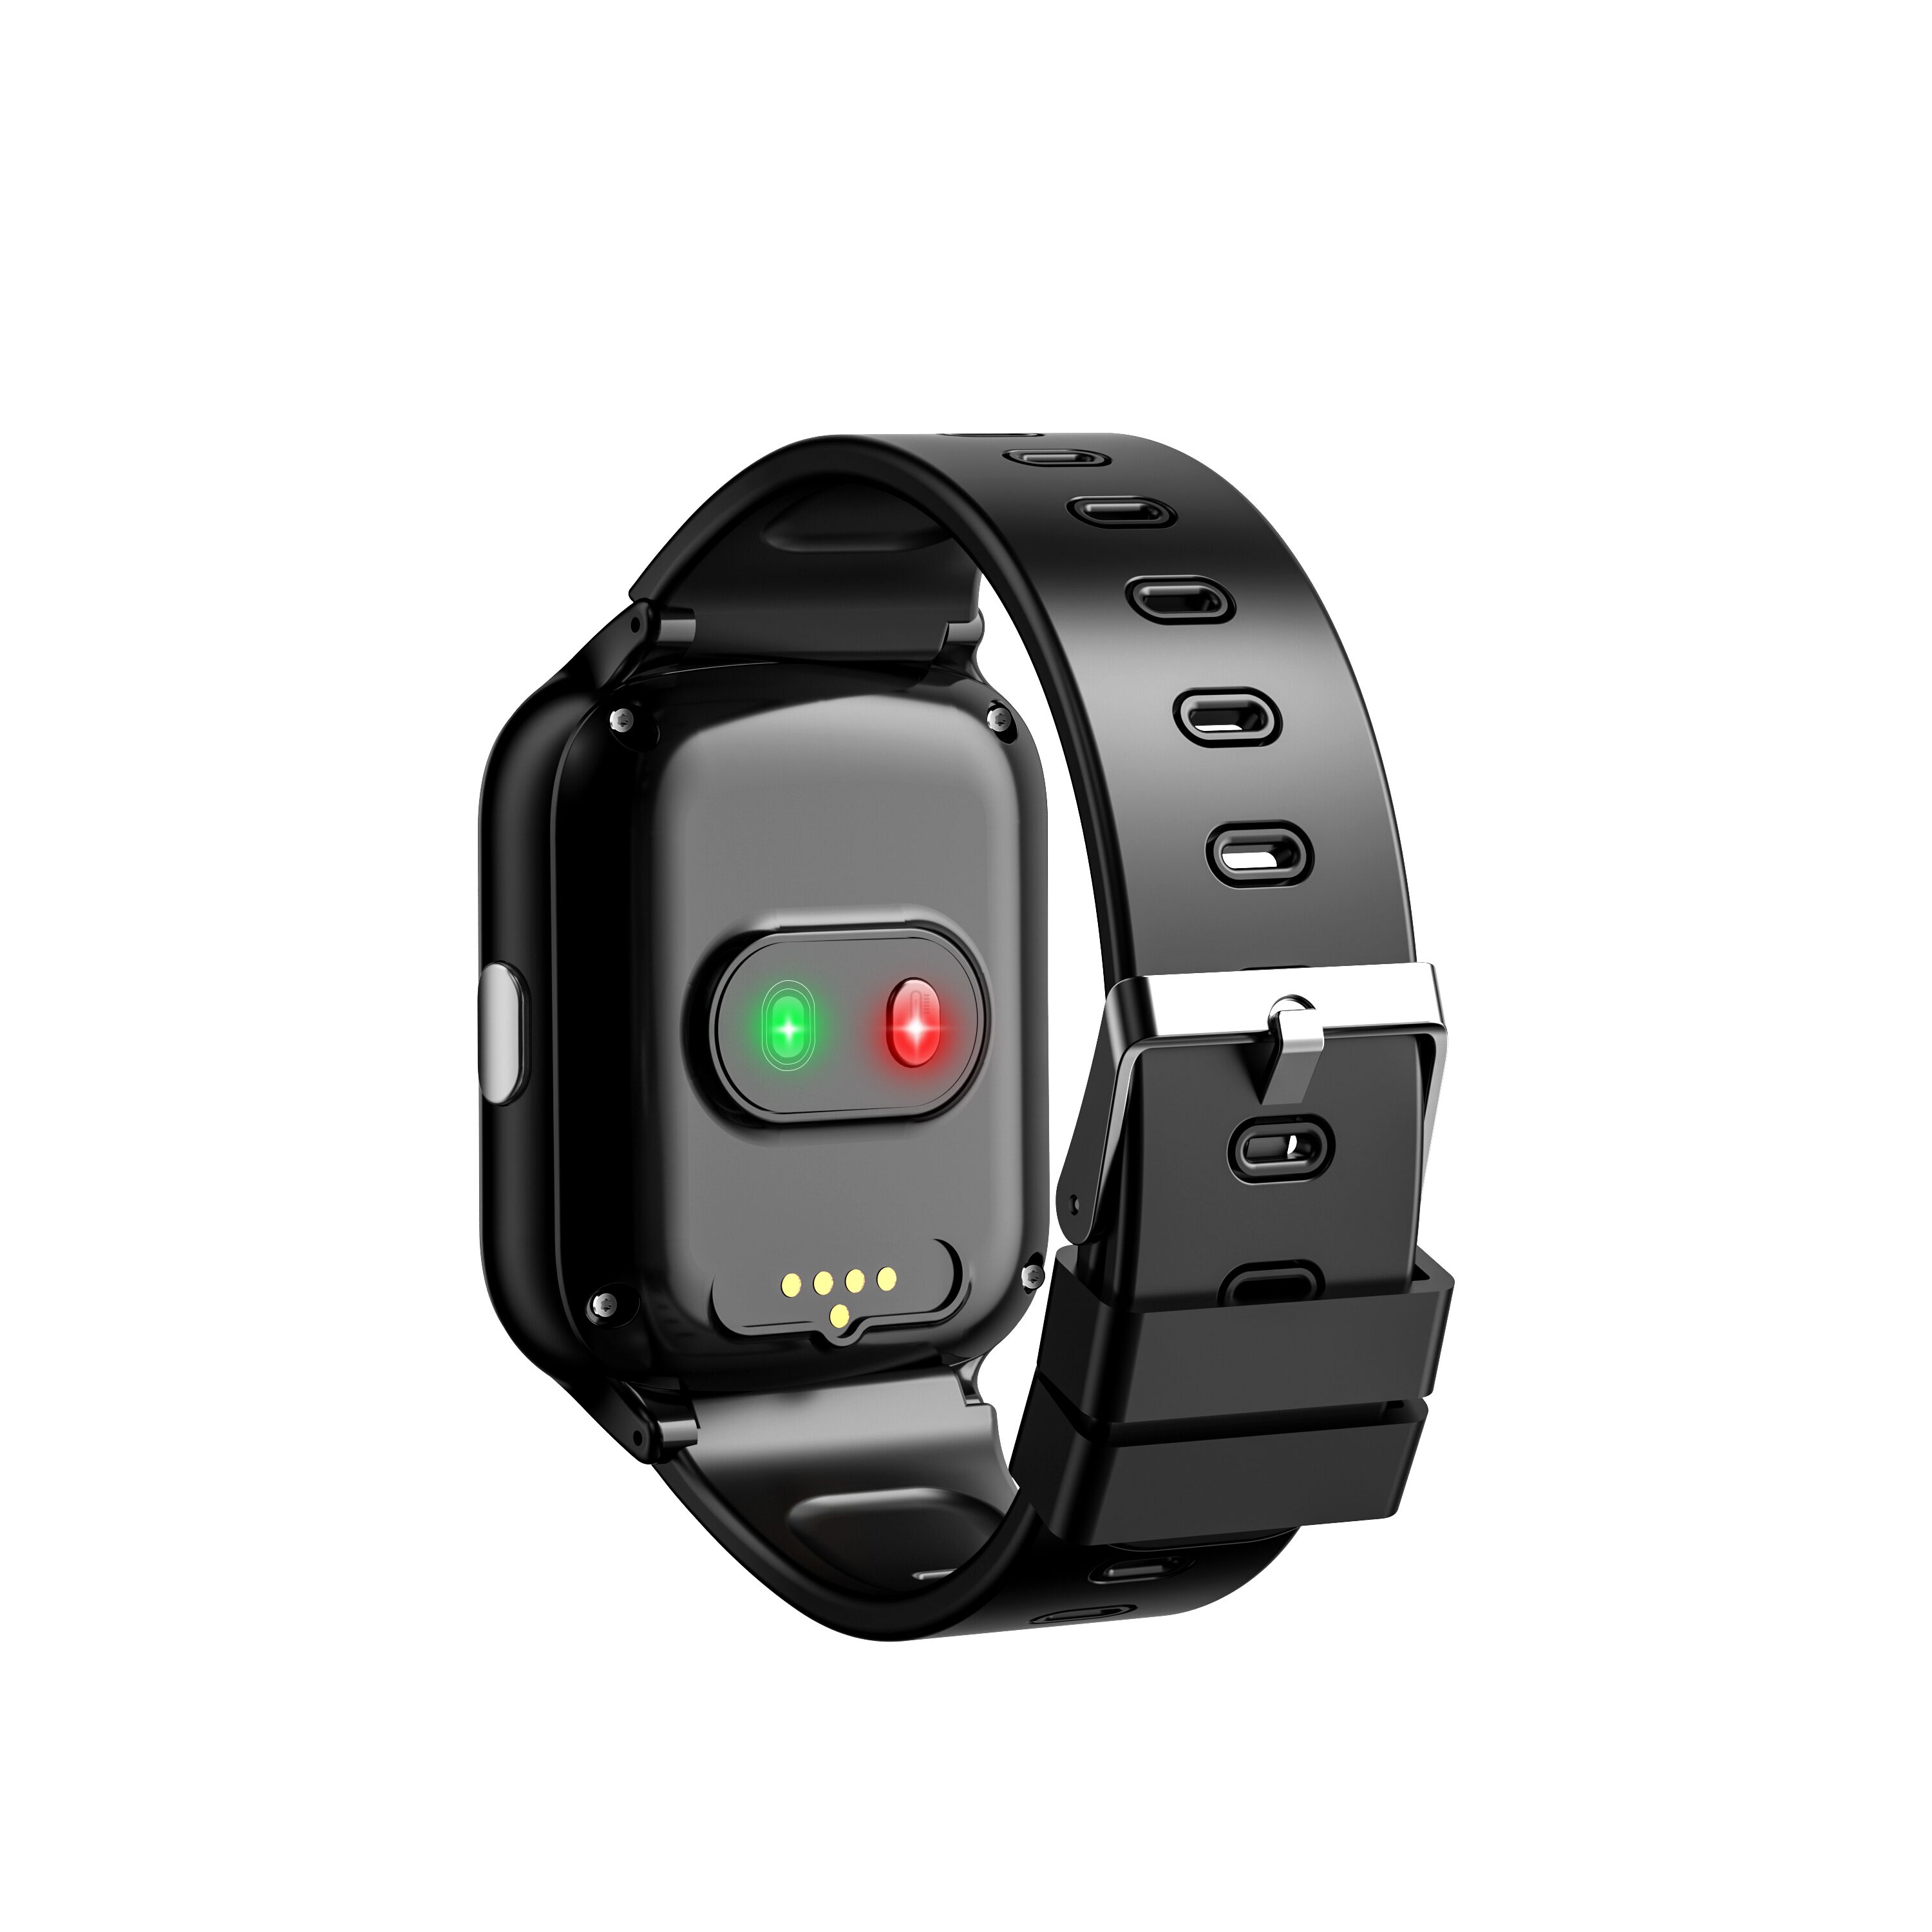 4G Waterproof body temperature senior healthcare GPS Tracker Watch D41